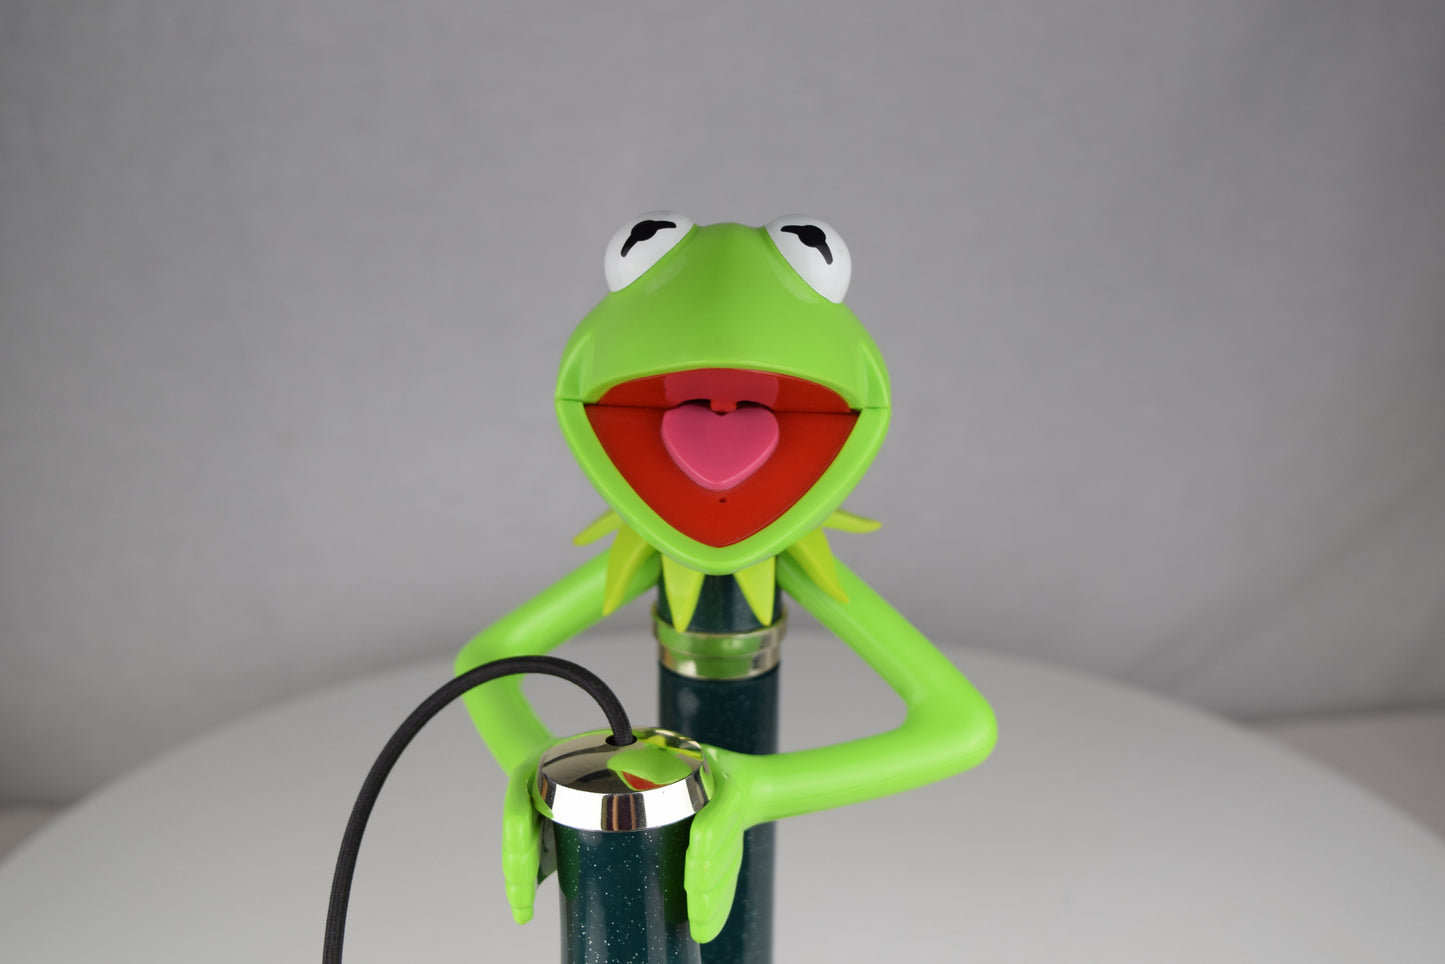 Kermit the Frog Candlestick Novelty Phone